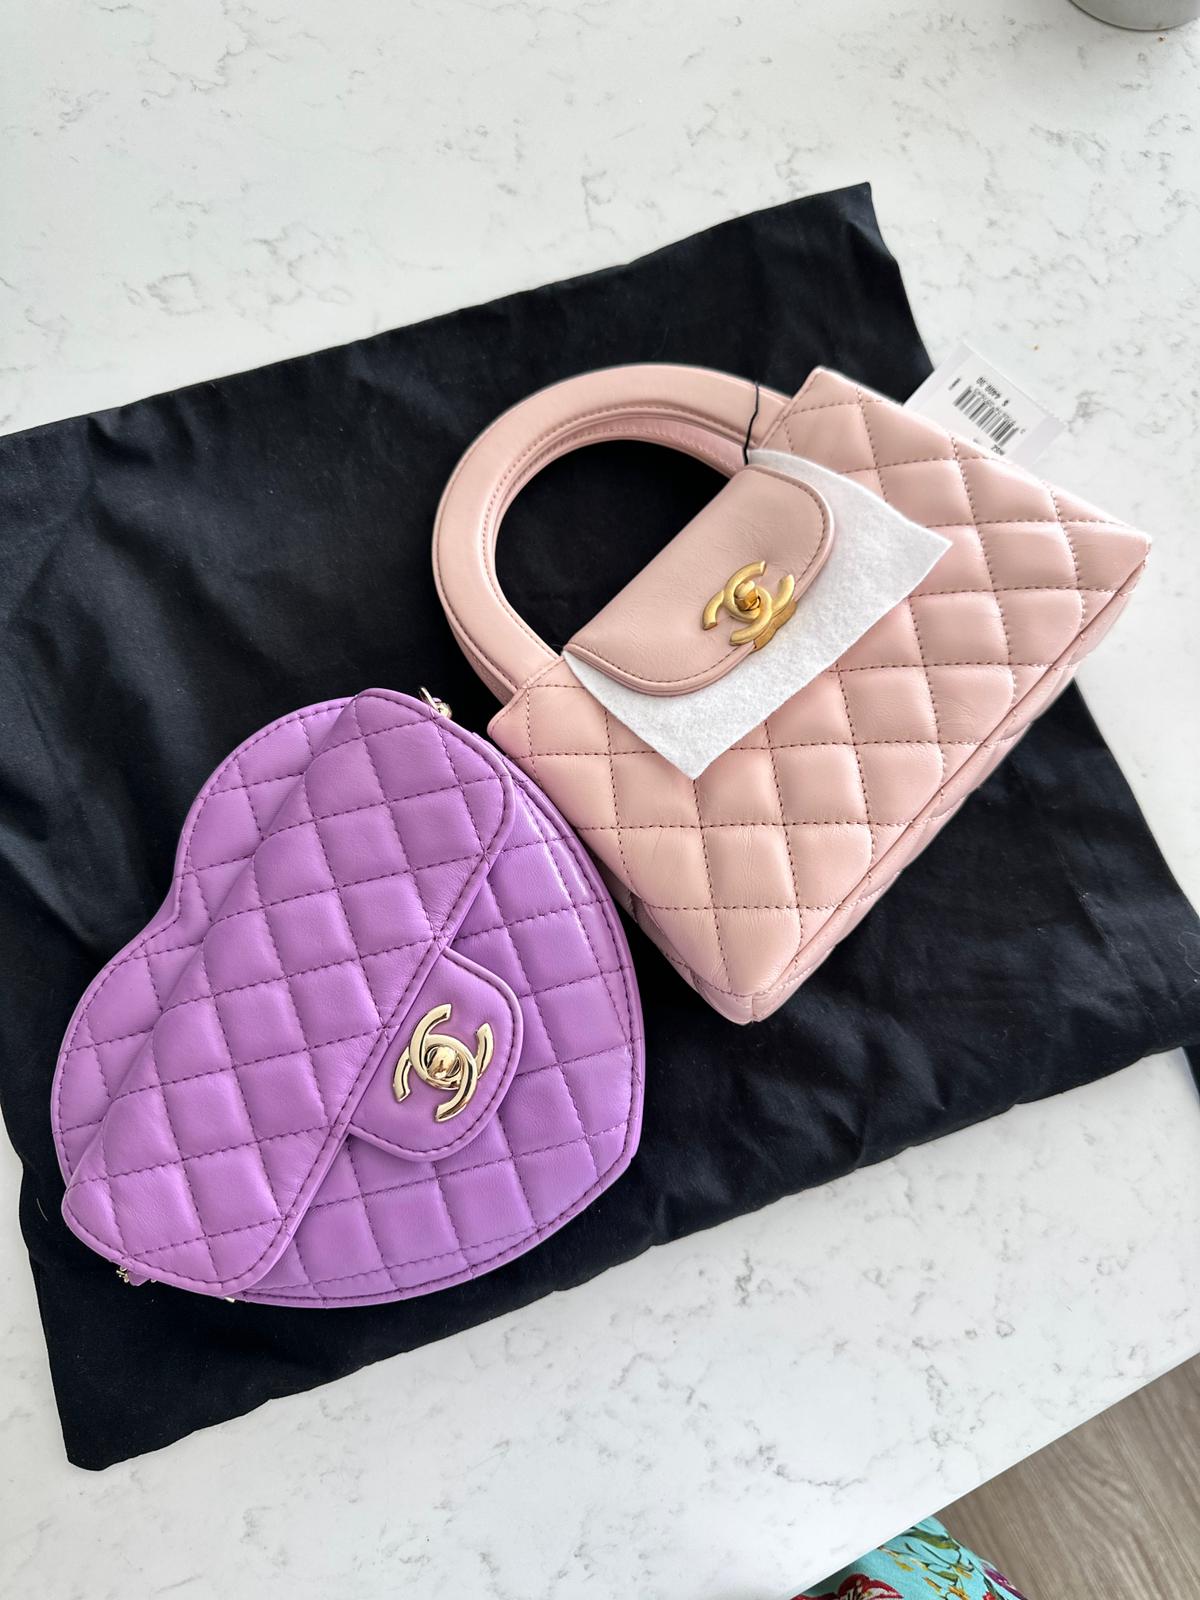 This Week, Chanel's Bags Continue to Dominate Celeb Handbag Tastes -  PurseBlog